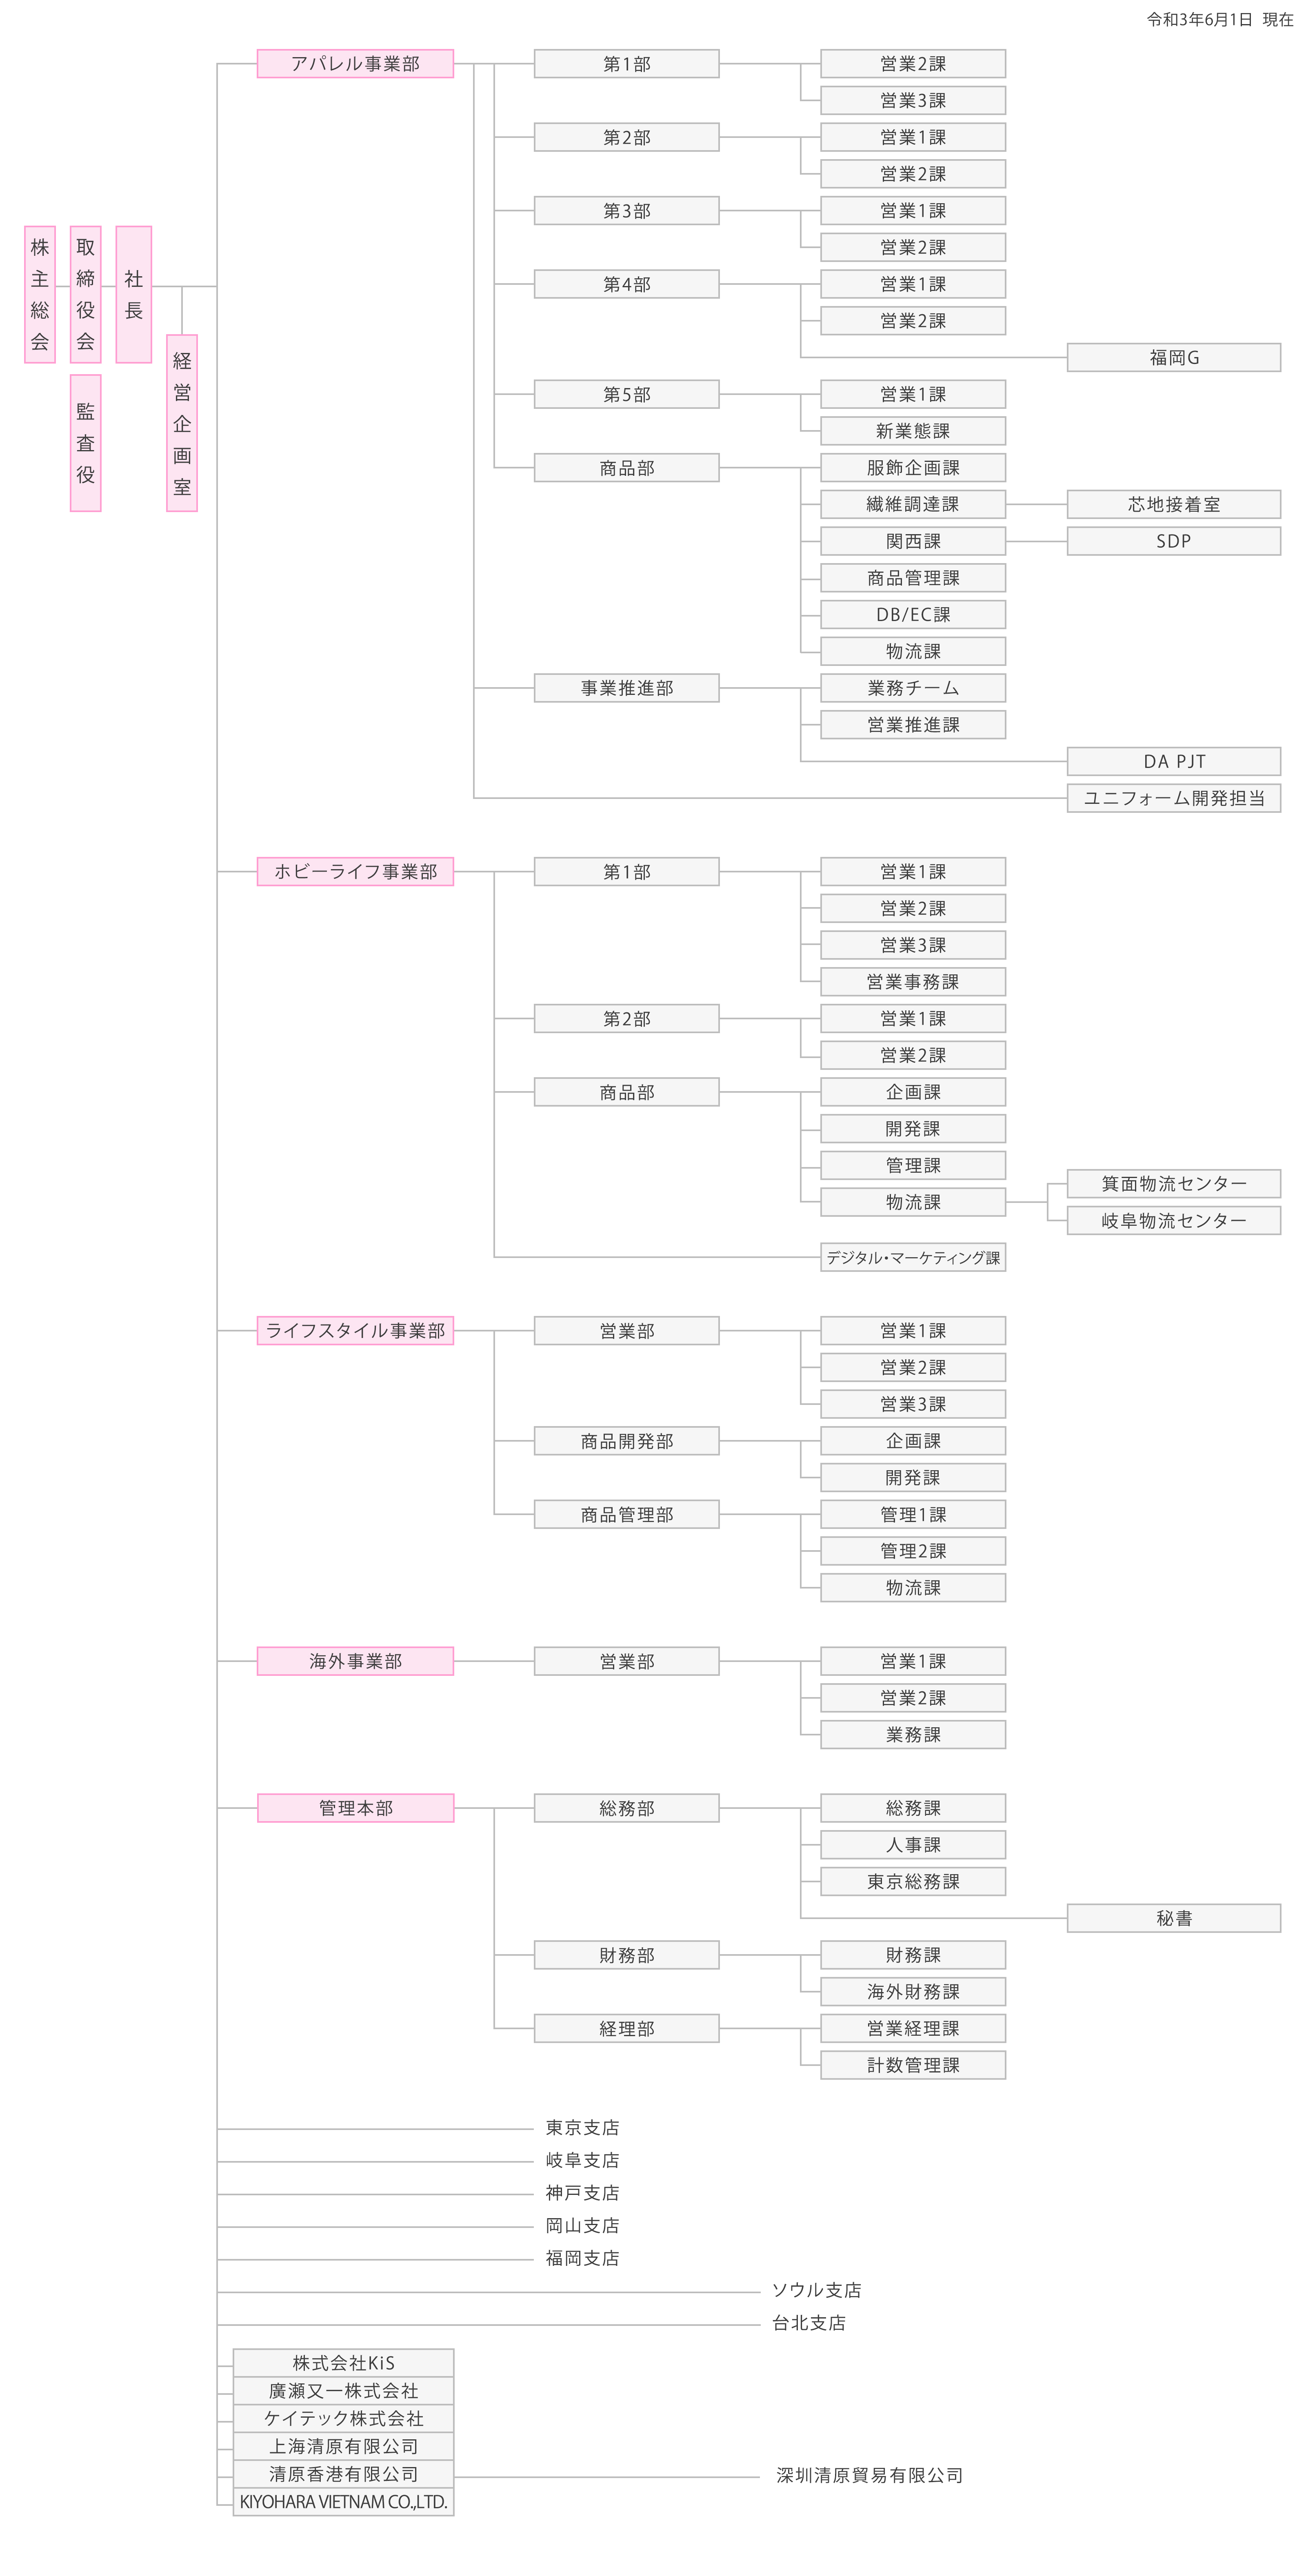 organization_chart_77.jpg